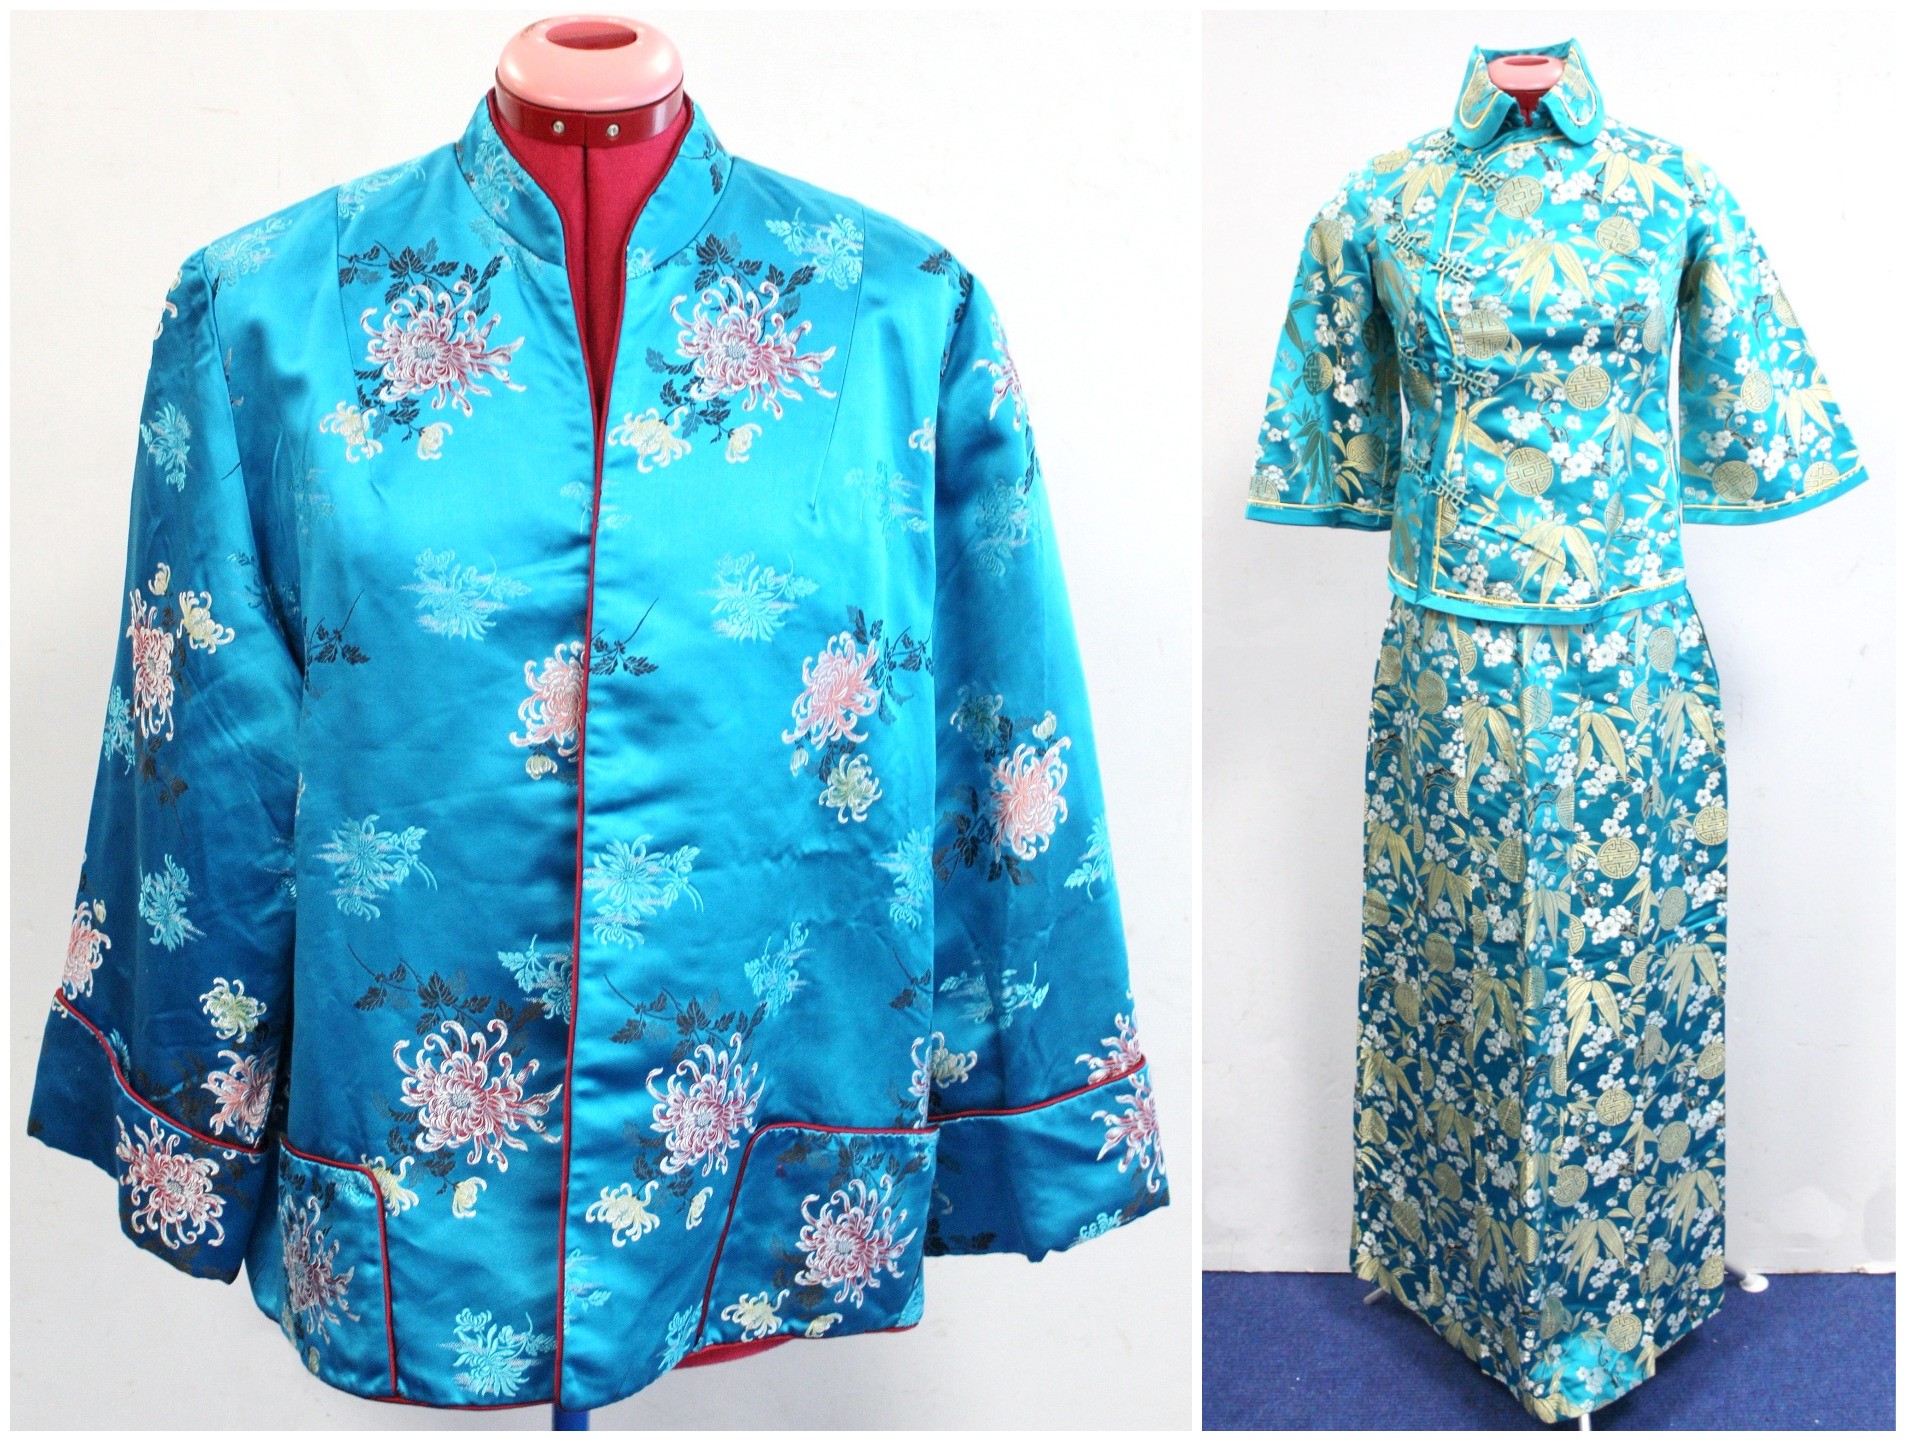 JDL.LADY wadded jacket By china(hongkong)Lady international limited company